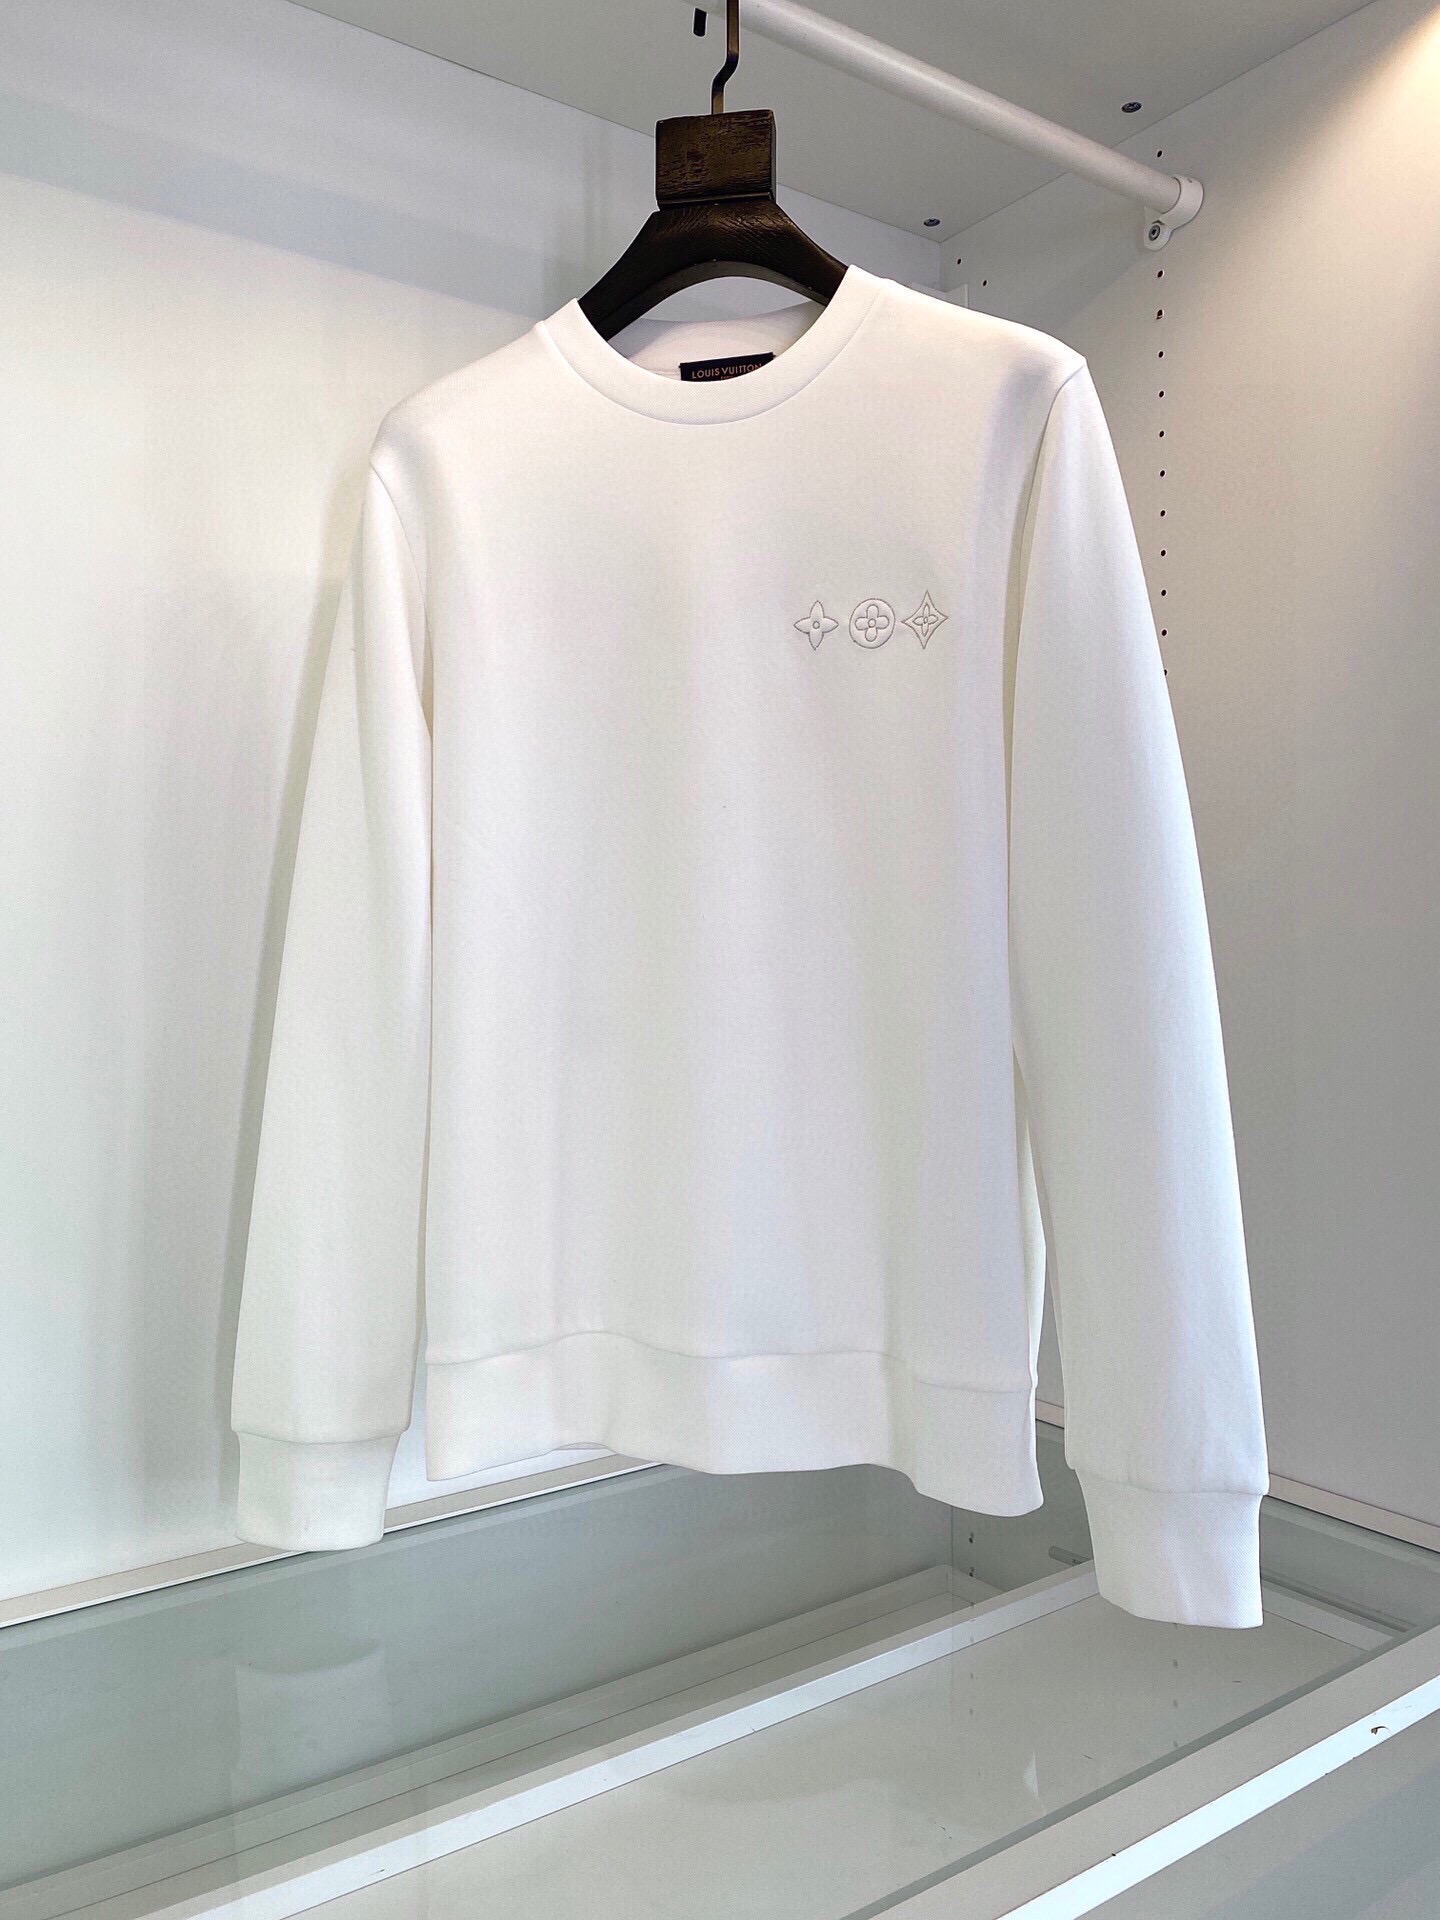 Louis Vuitton Clothing Sweatshirts Black Grey White Embroidery Fashion